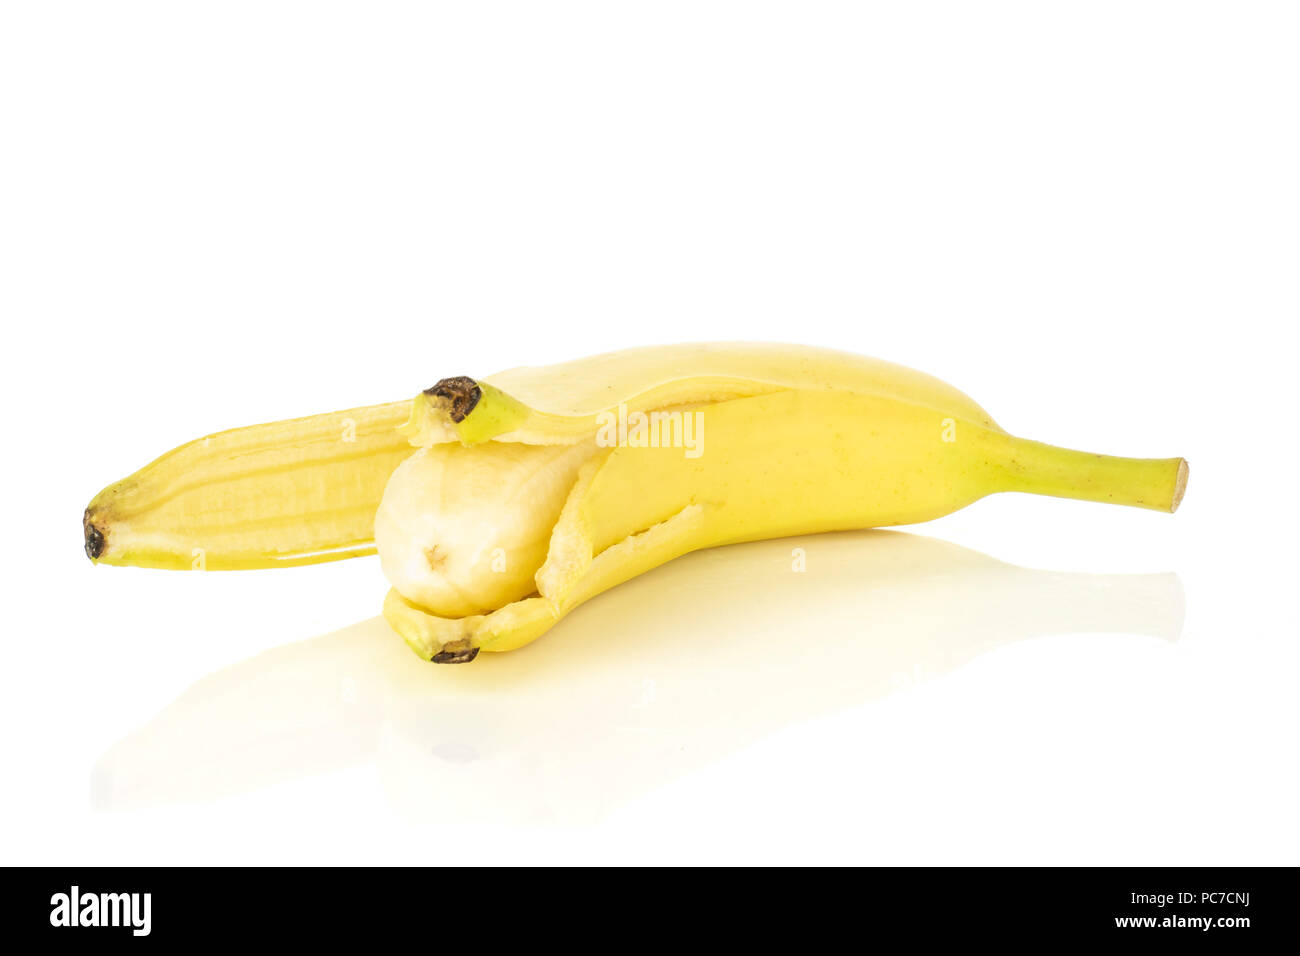 One whole open fresh yellow banana isolated on white background Stock Photo